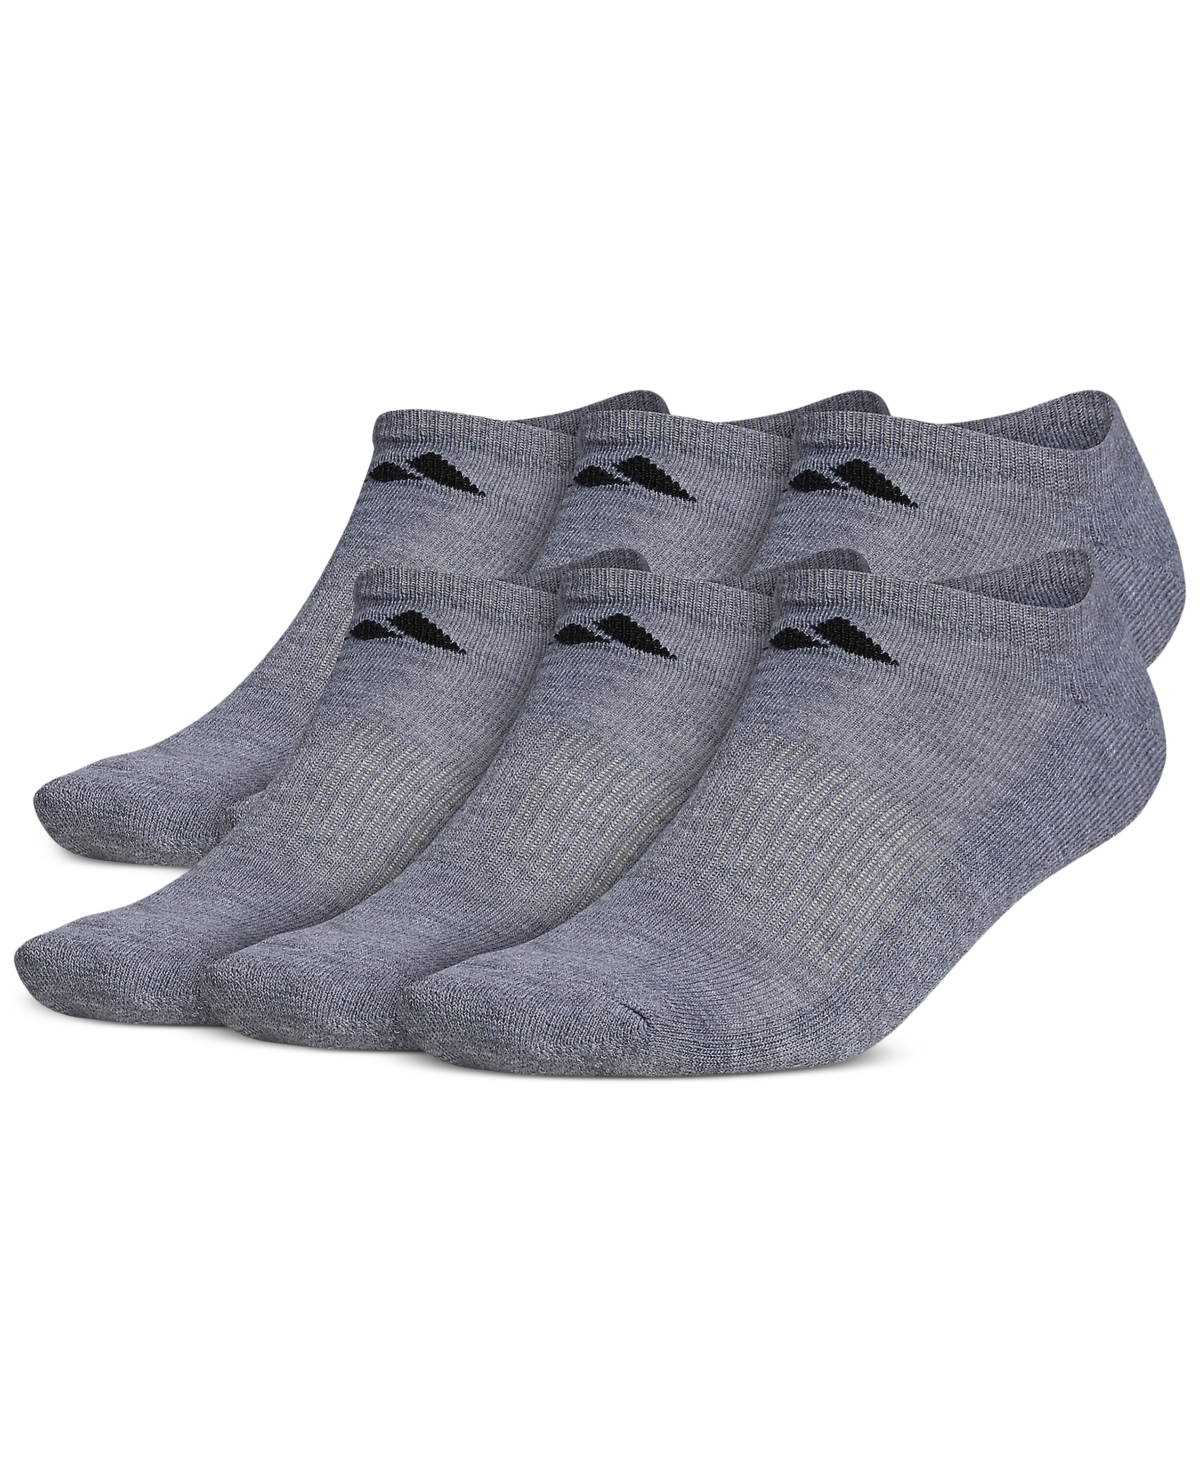 Men's Cushioned Athletic 6-Pack No Show Socks - Medium Grey